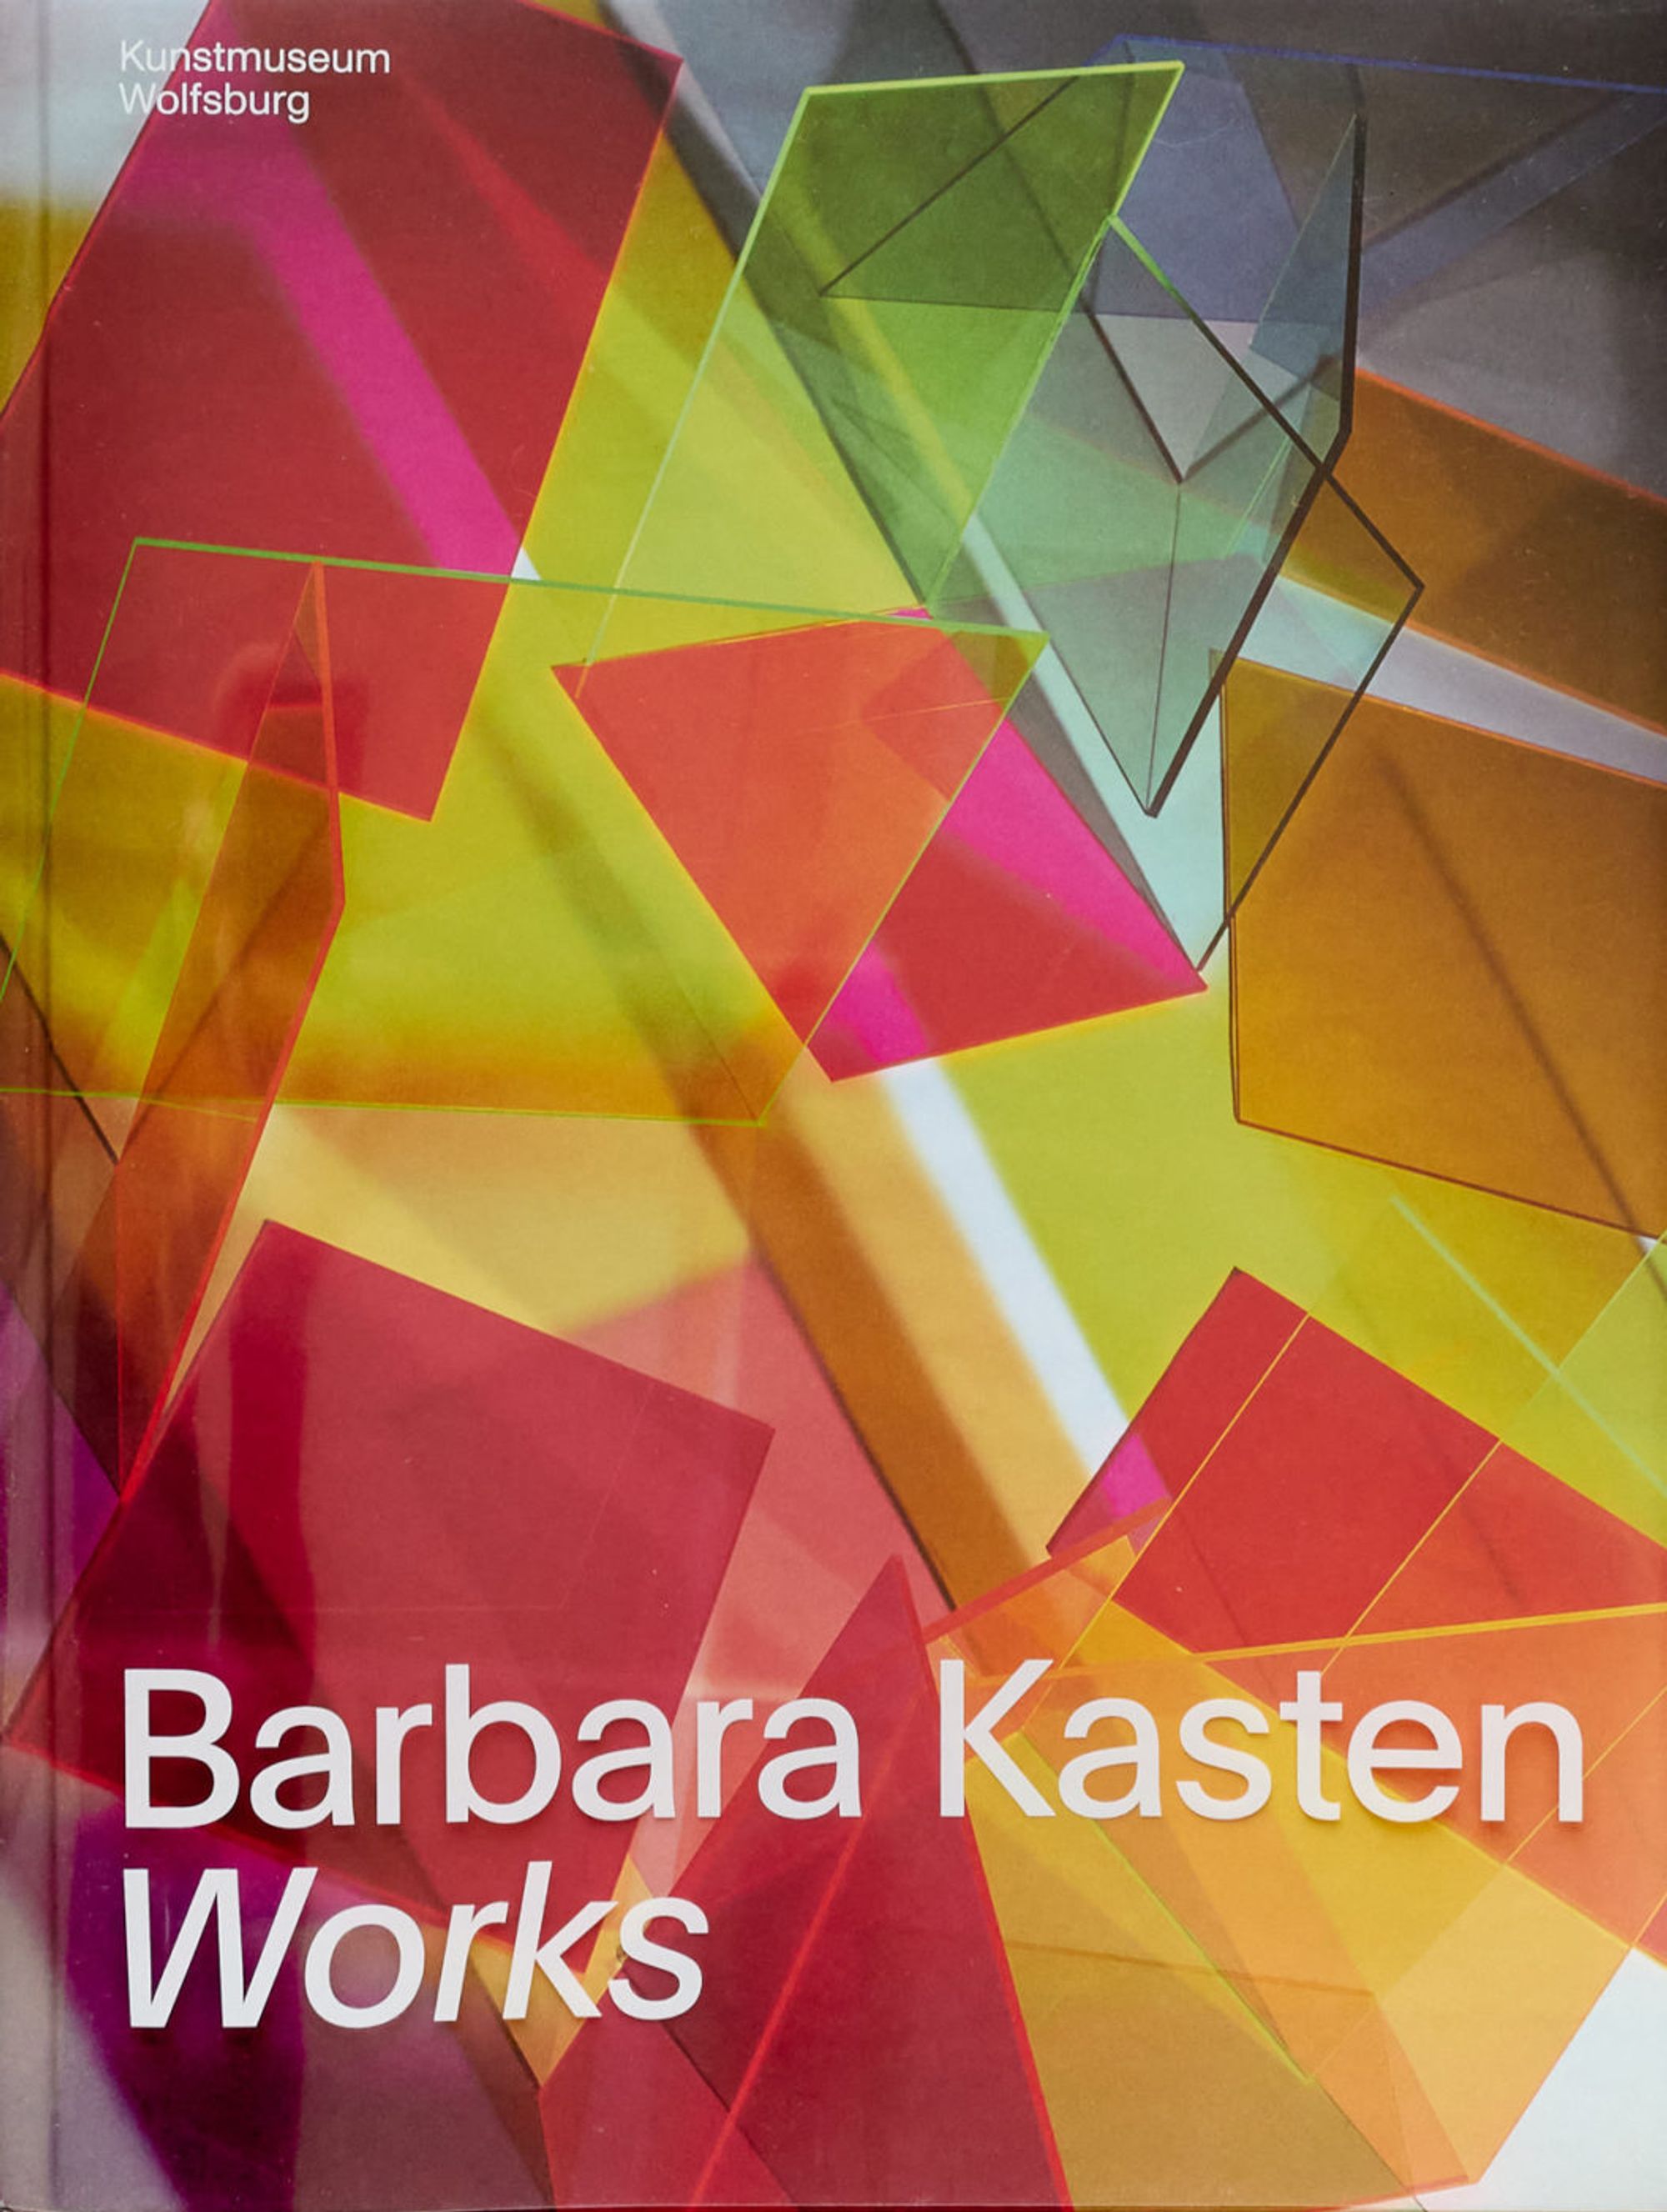 Detail view of Barbara Kasten: Works, Kunstmuseum Wolfsburg, Wolfsburg, Germany against a plain gray background